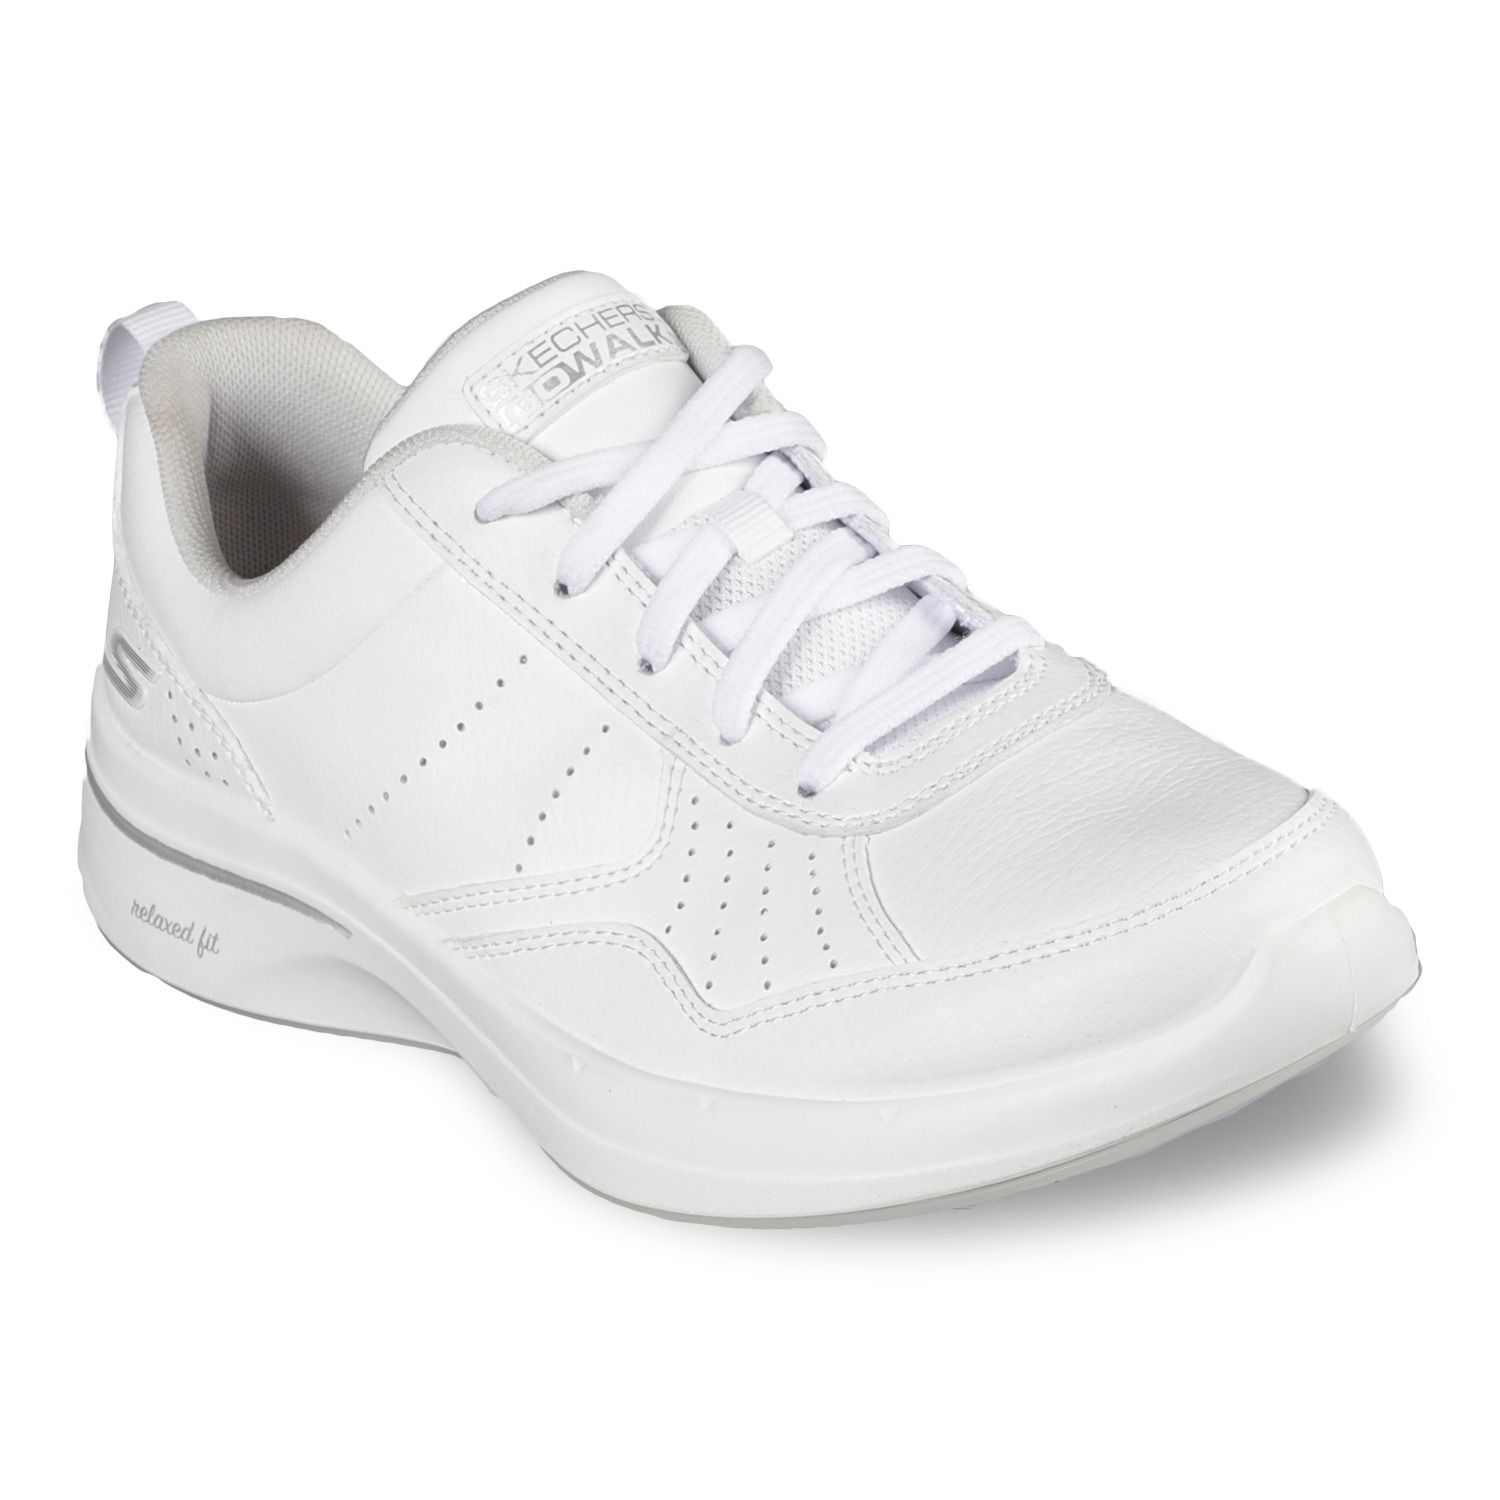 white walking tennis shoes